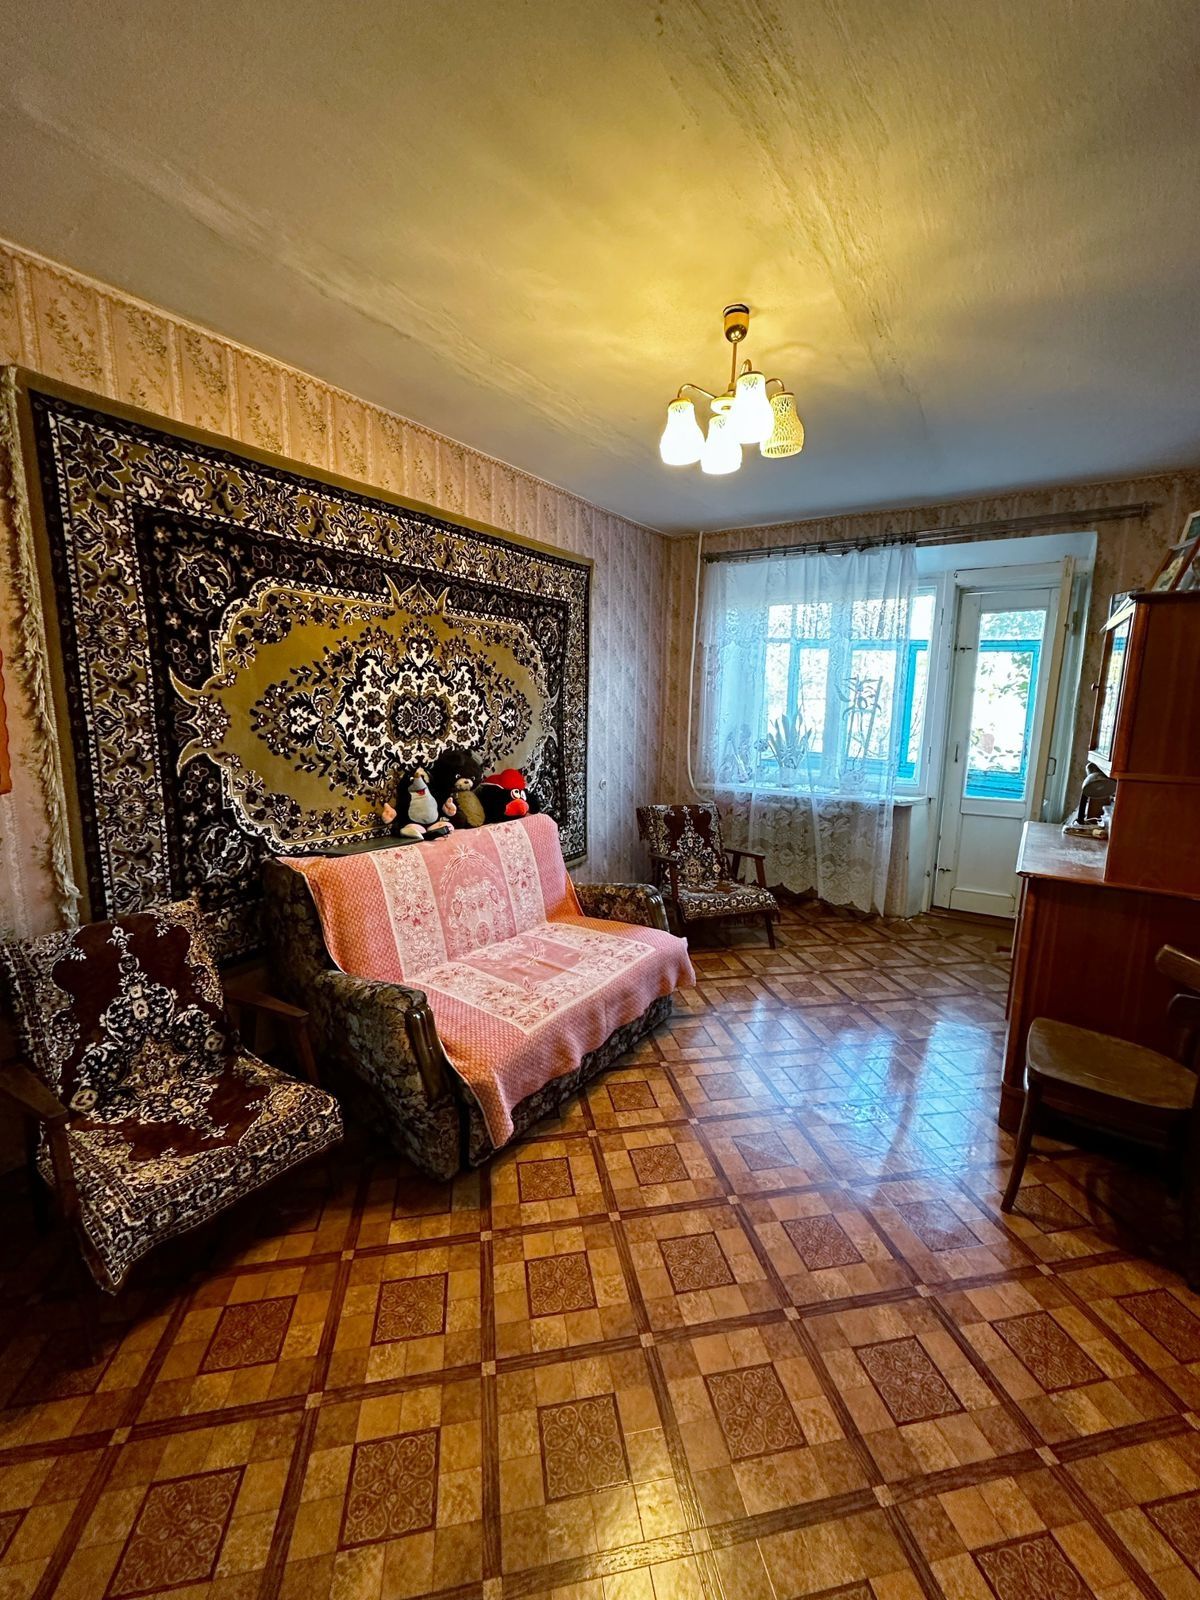 Продается 3х-комнатная квартира в районе Ремзавод